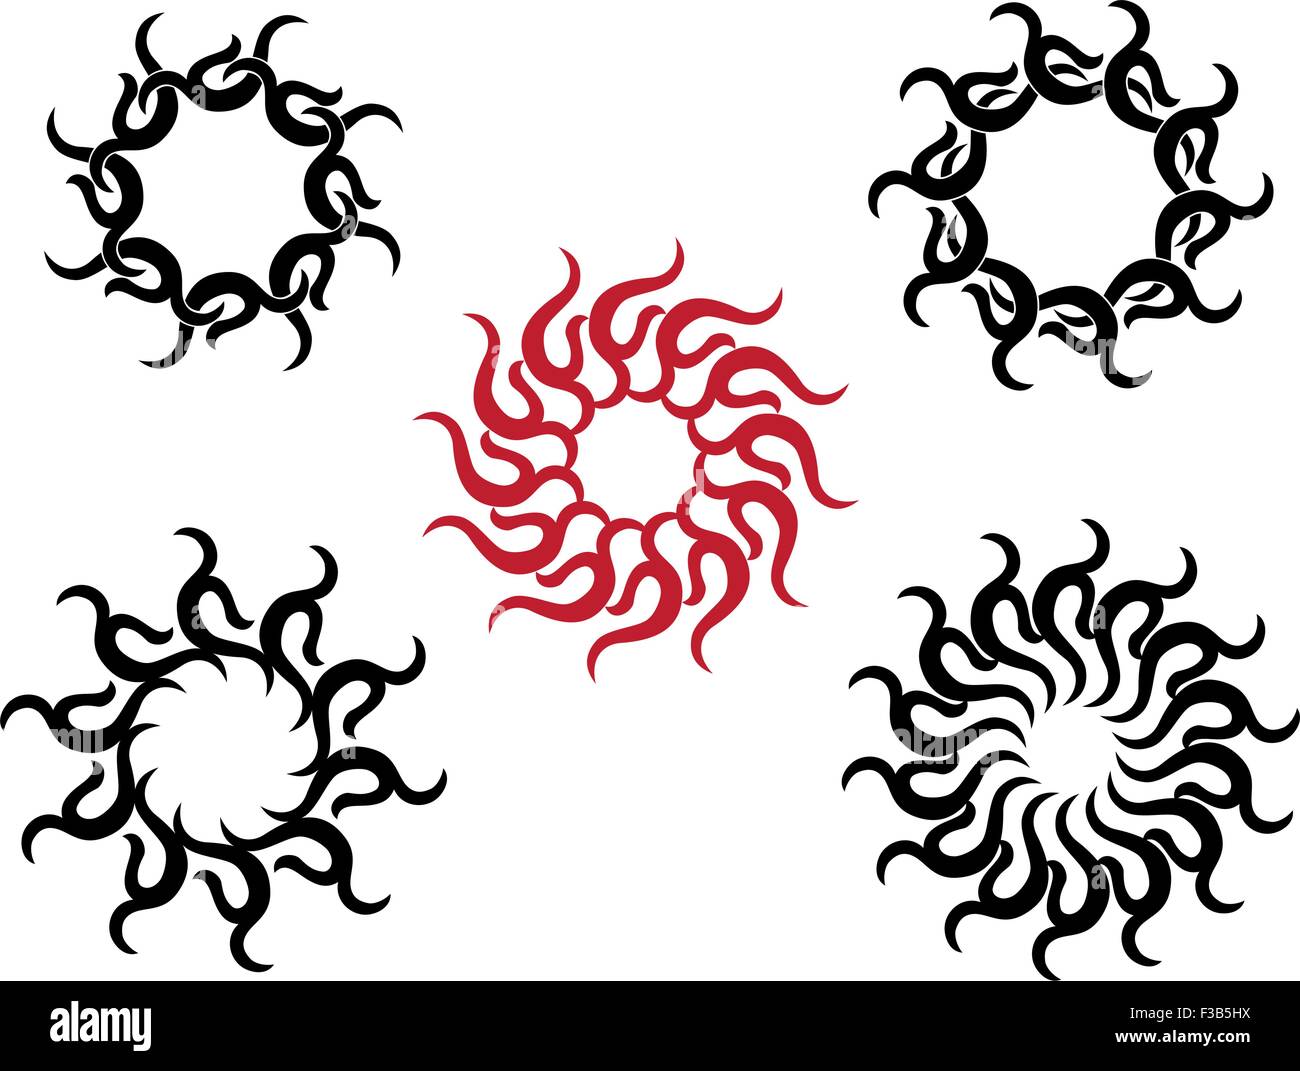 Tattoo Sun, Flame Tribal Design Vector Art Stock Vector Image & Art - Alamy